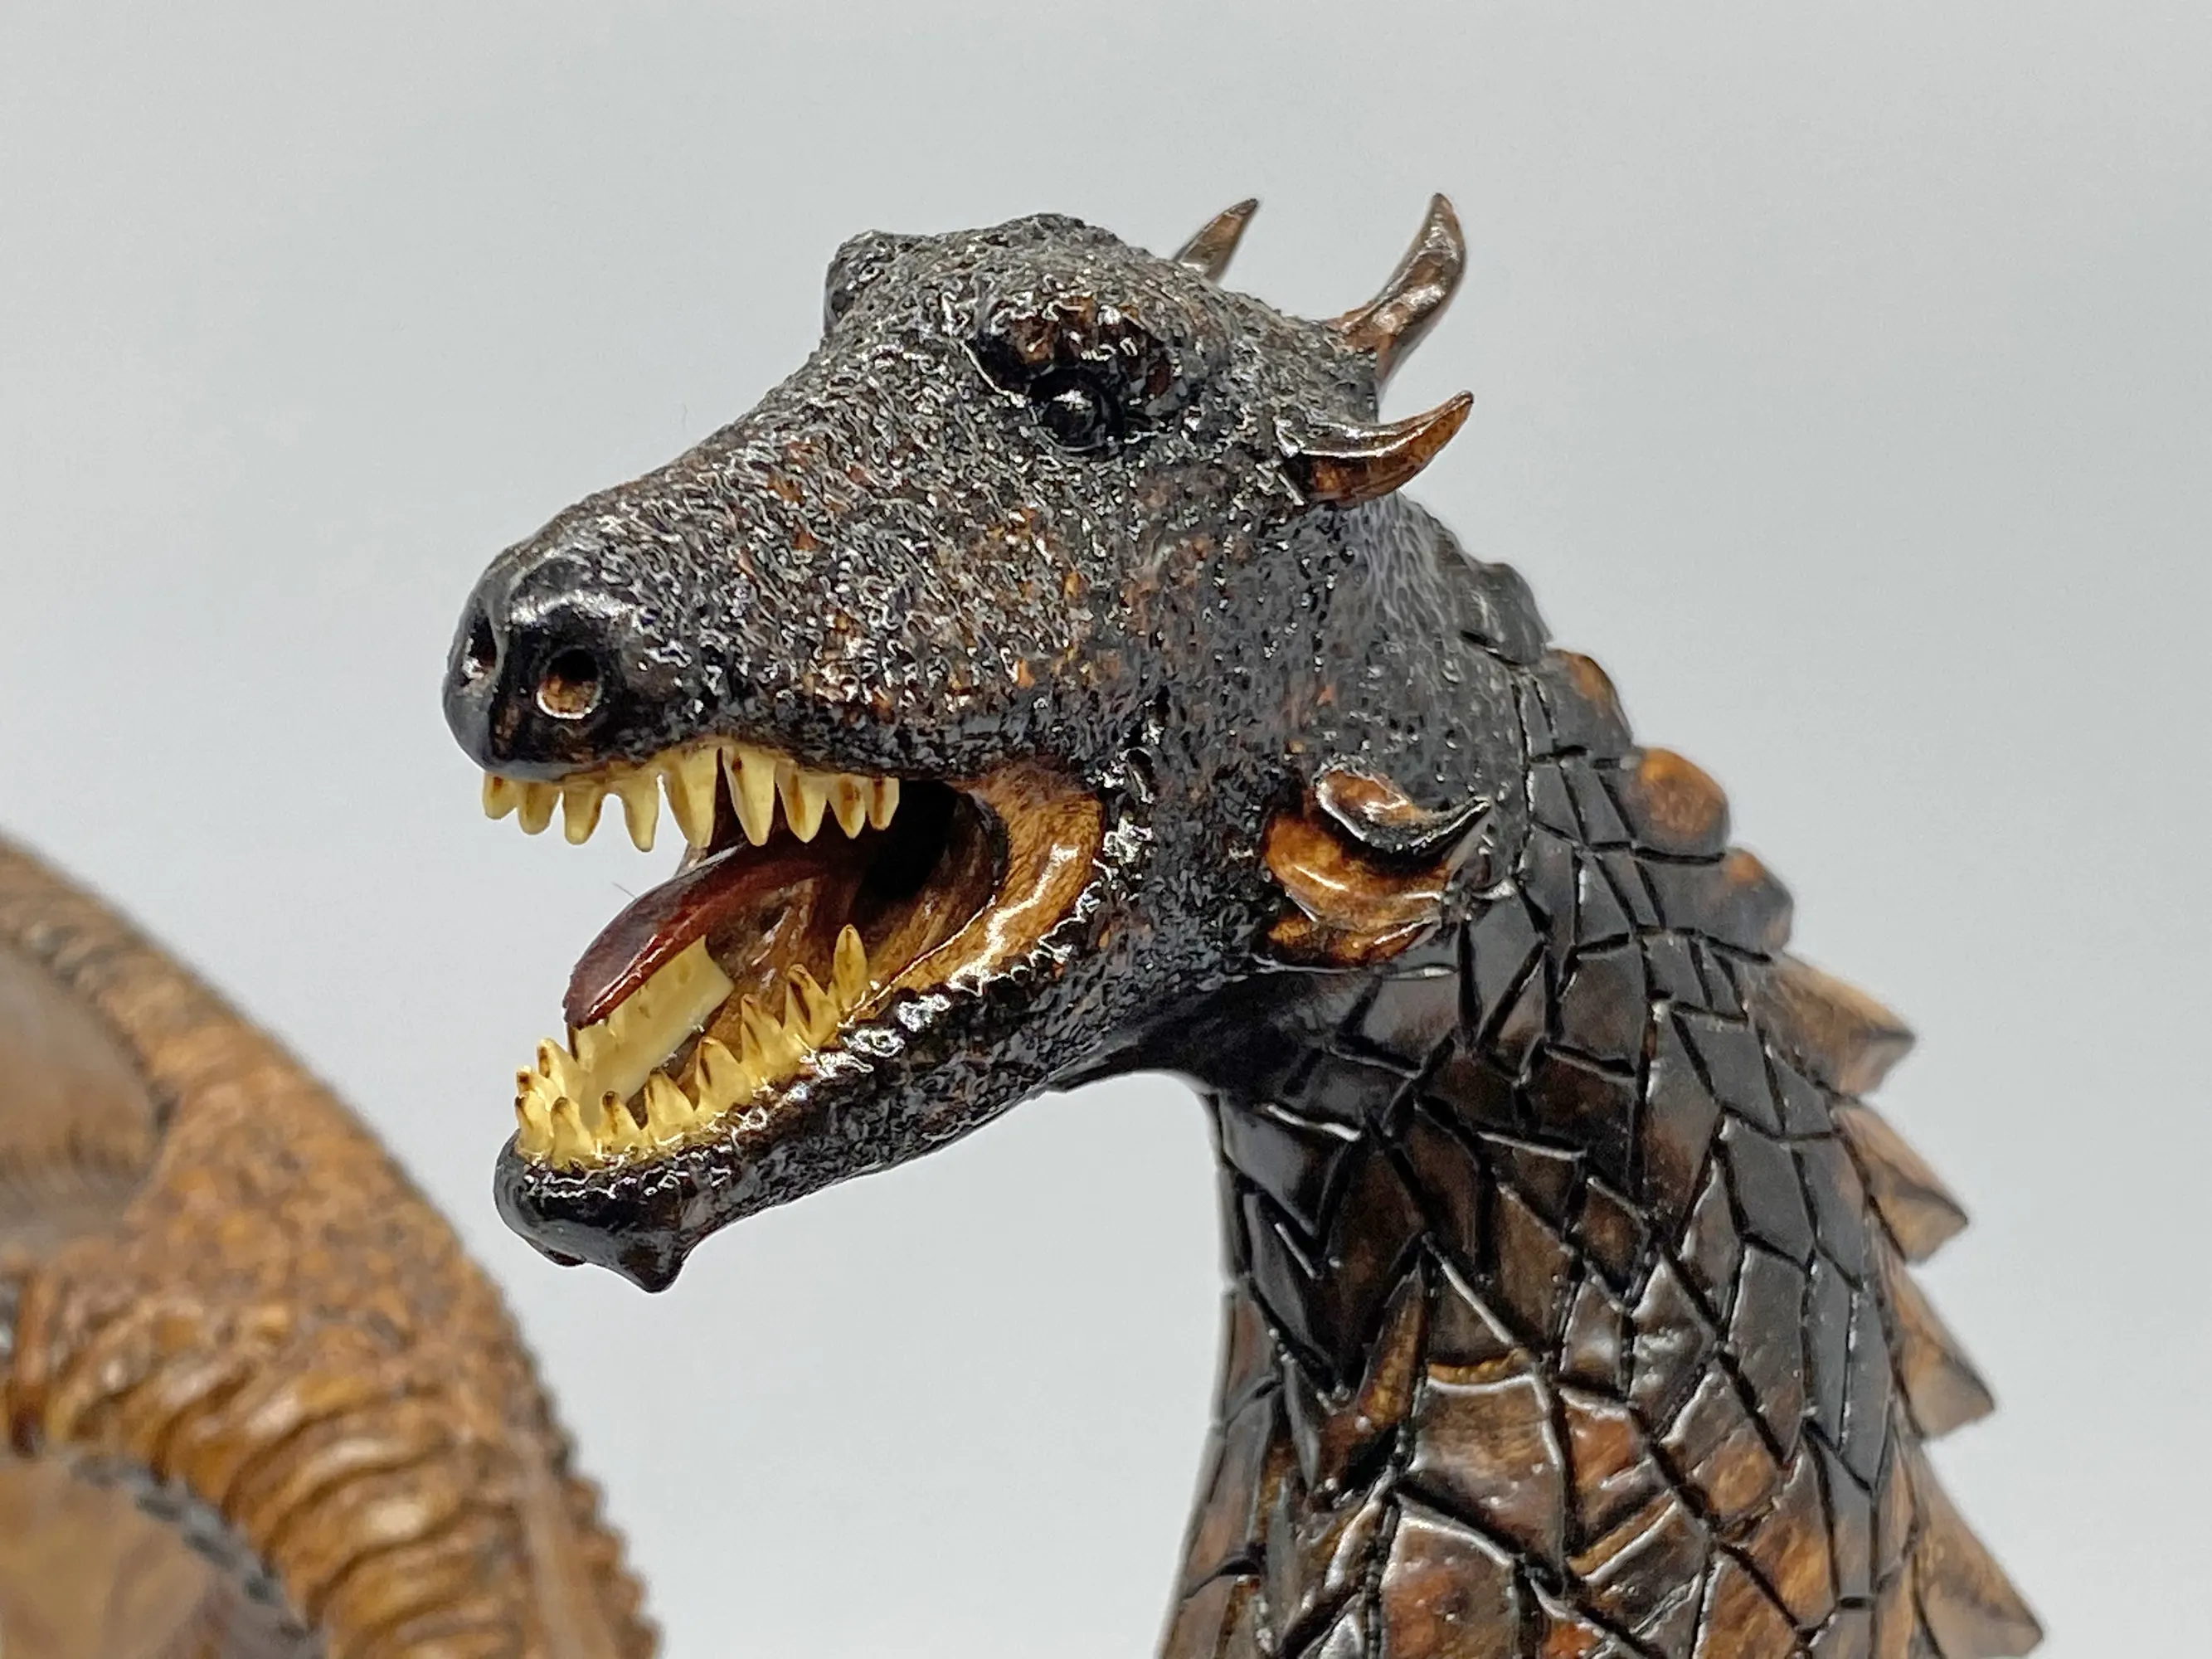 Dragon woodcarving sculpture